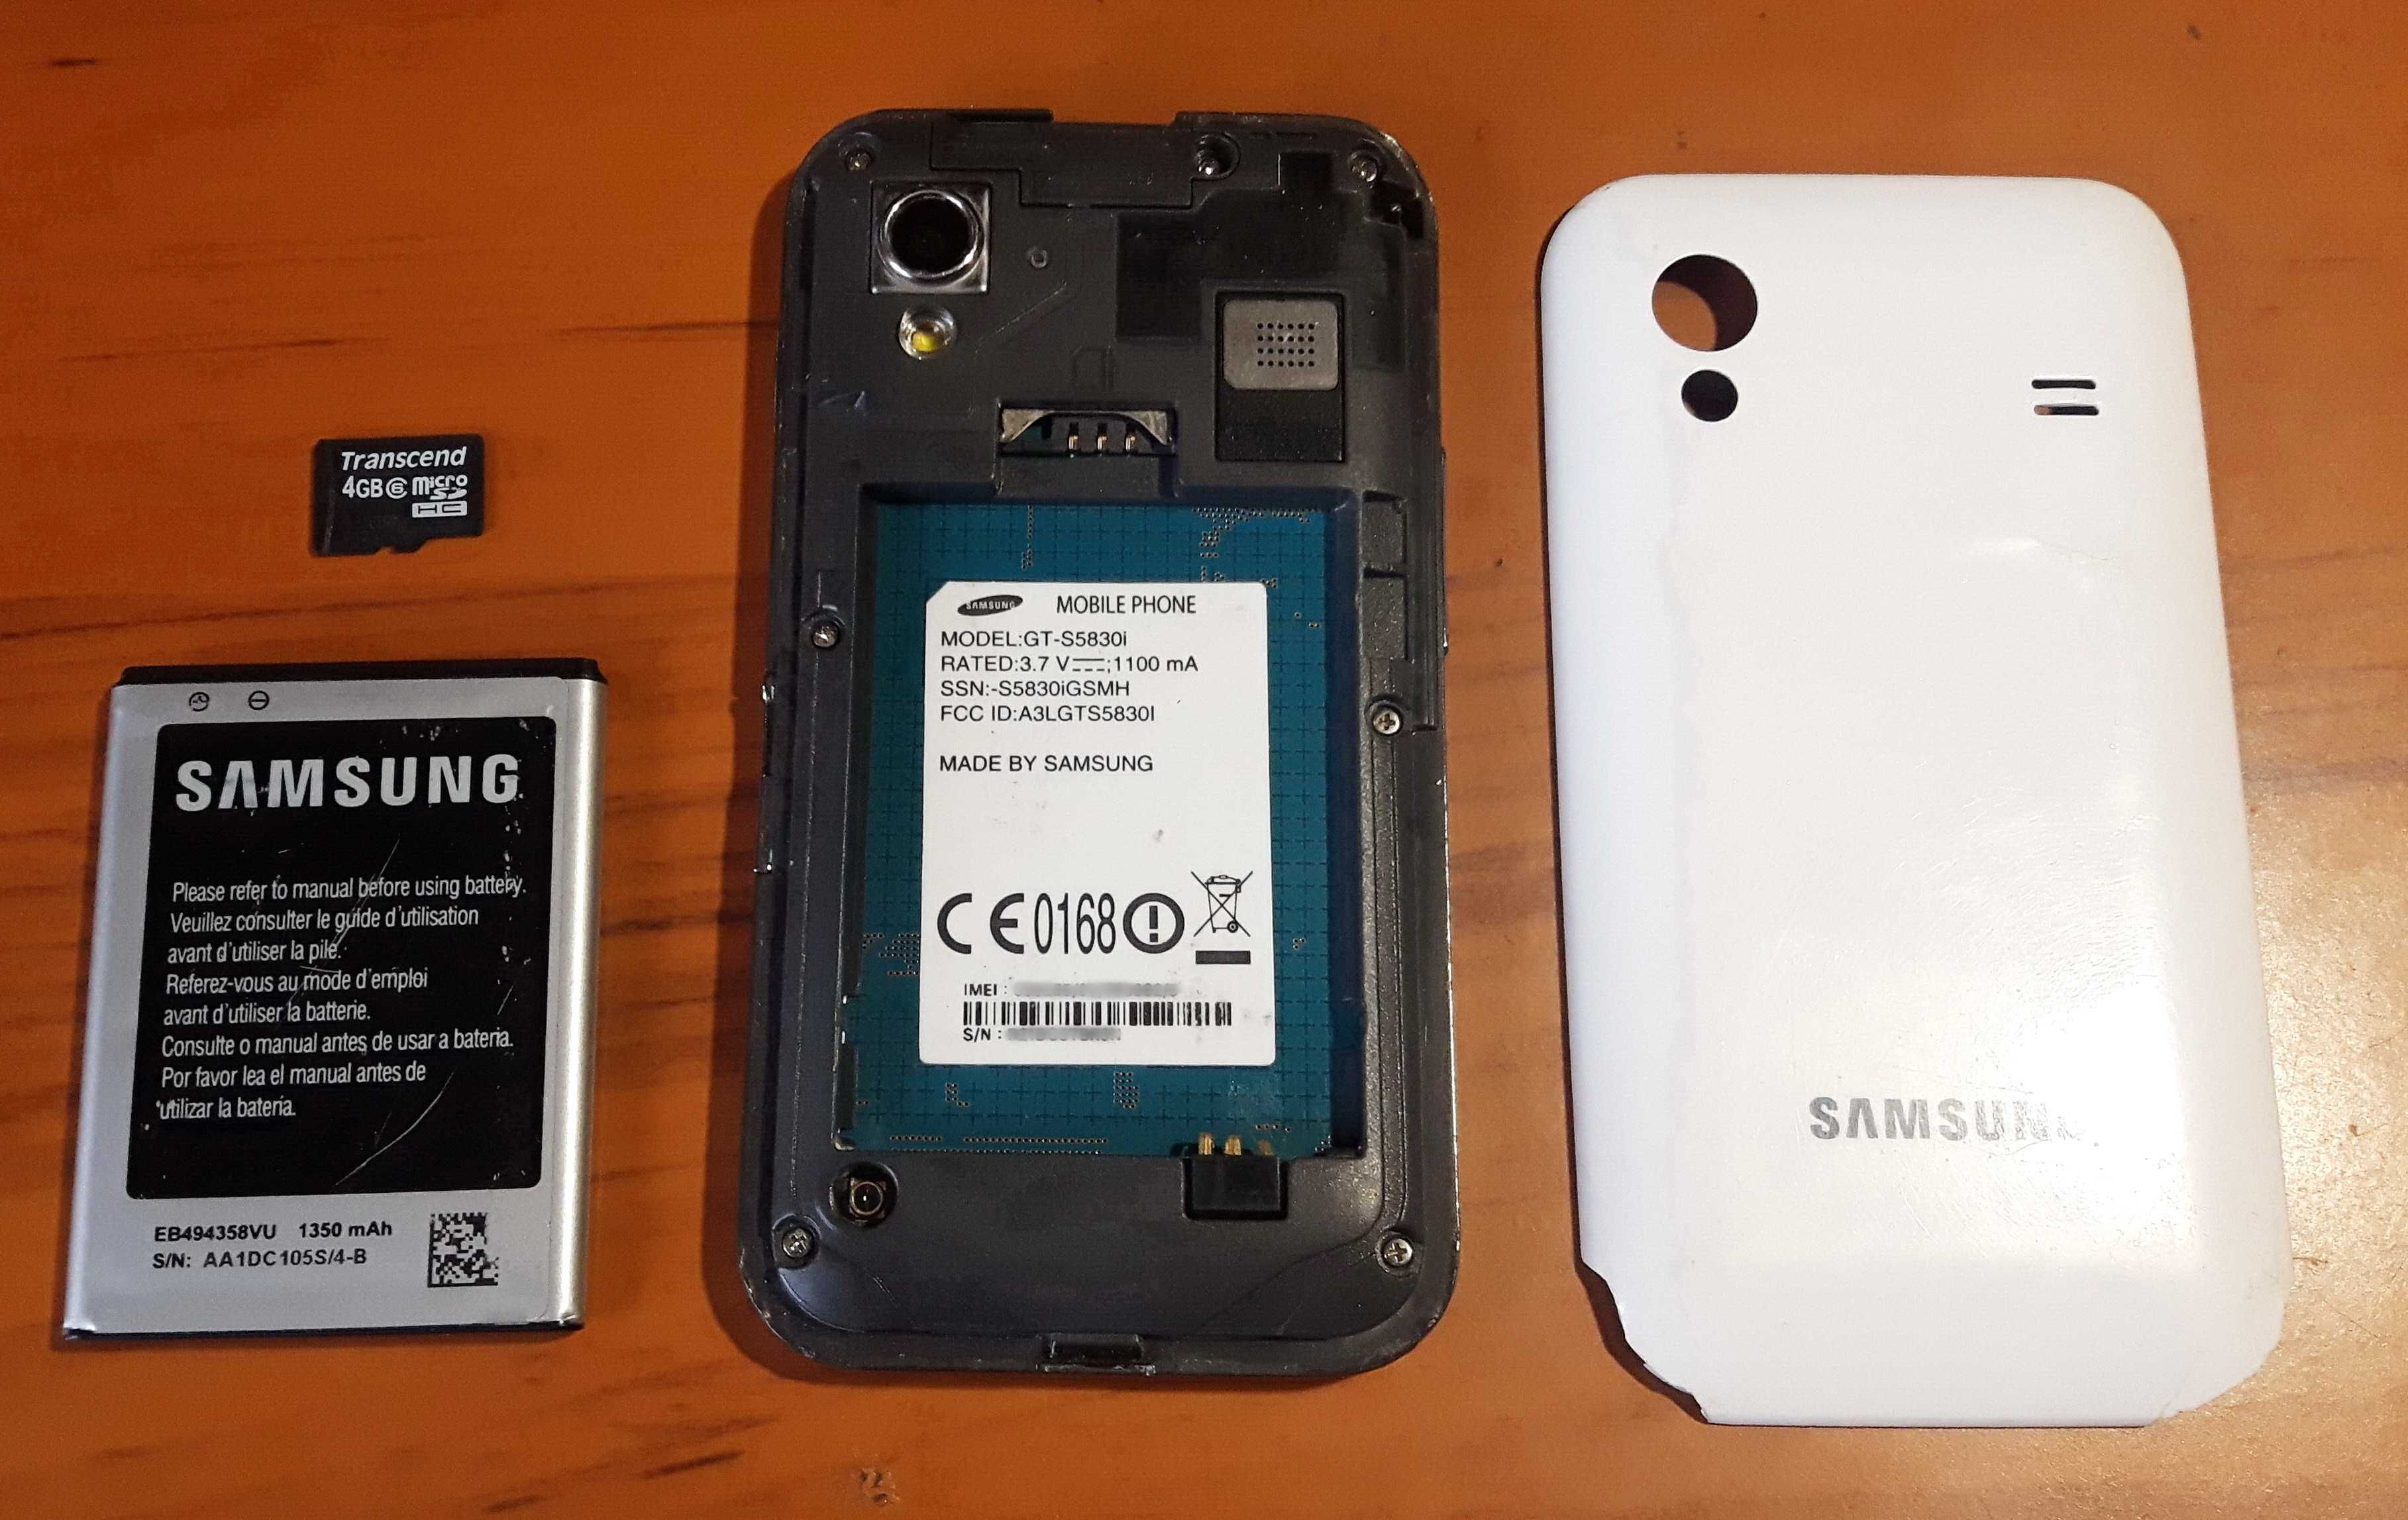 Смартфон Samsung Galaxy Ace S5830i + карта памяти MicroSD 4Гб